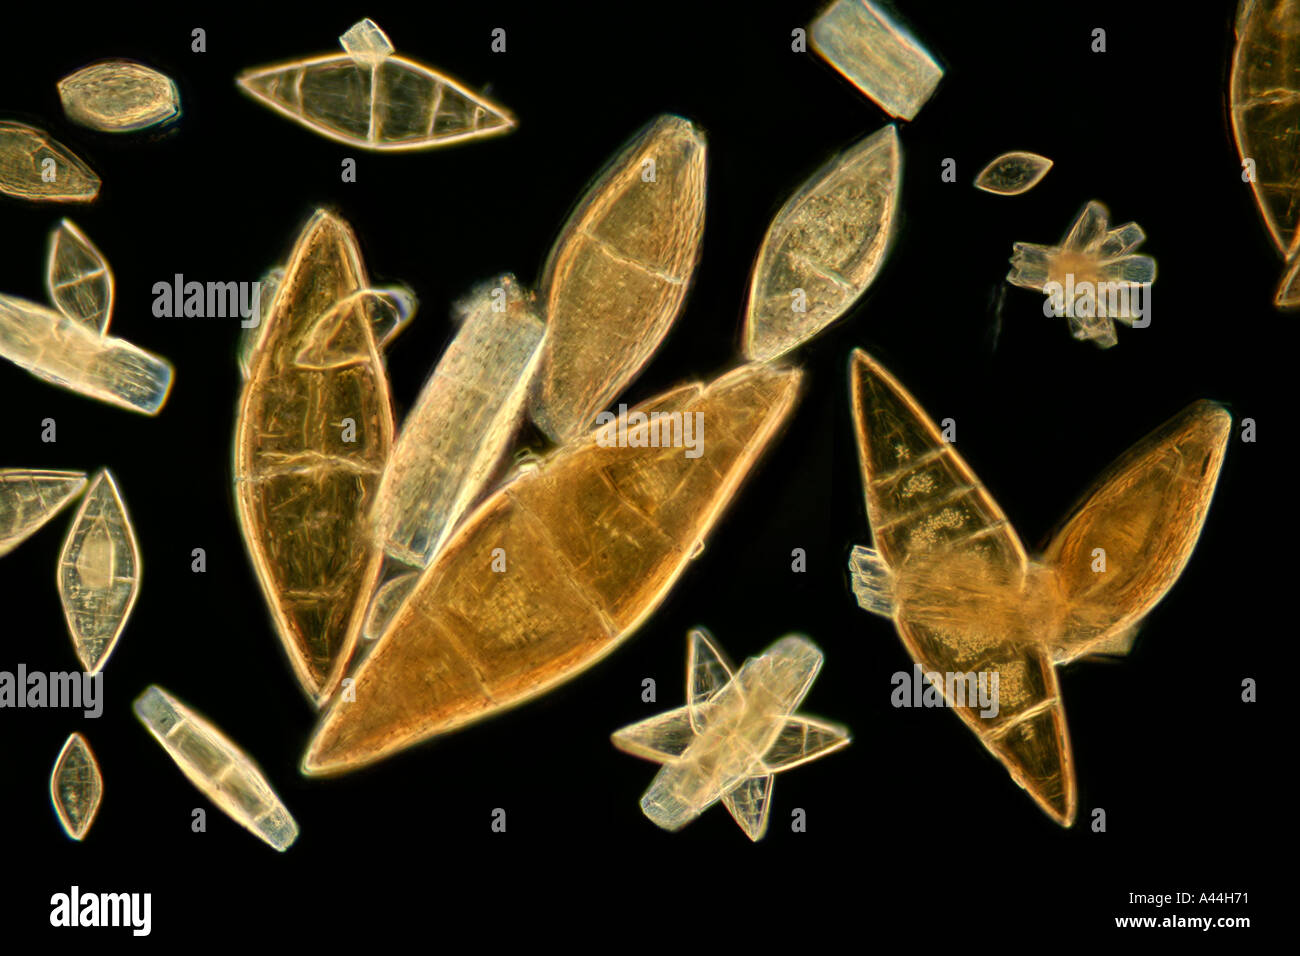 uric acid crystals in urine